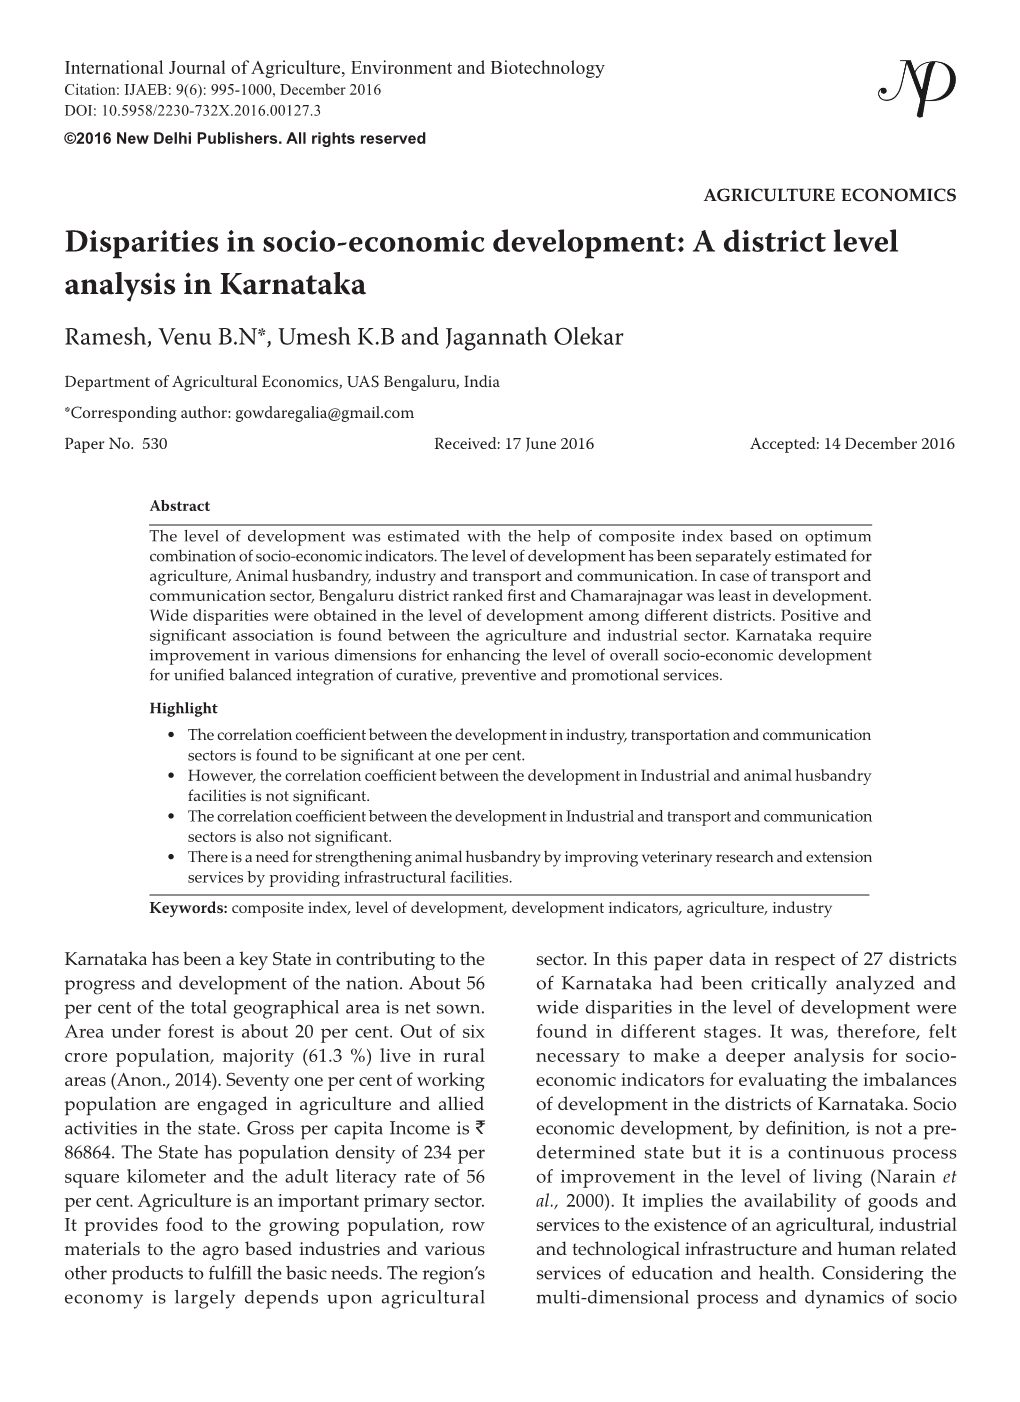 Disparities in Socio-Economic Development: a District Level Analysis in Karnataka Ramesh, Venu B.N*, Umesh K.B and Jagannath Olekar